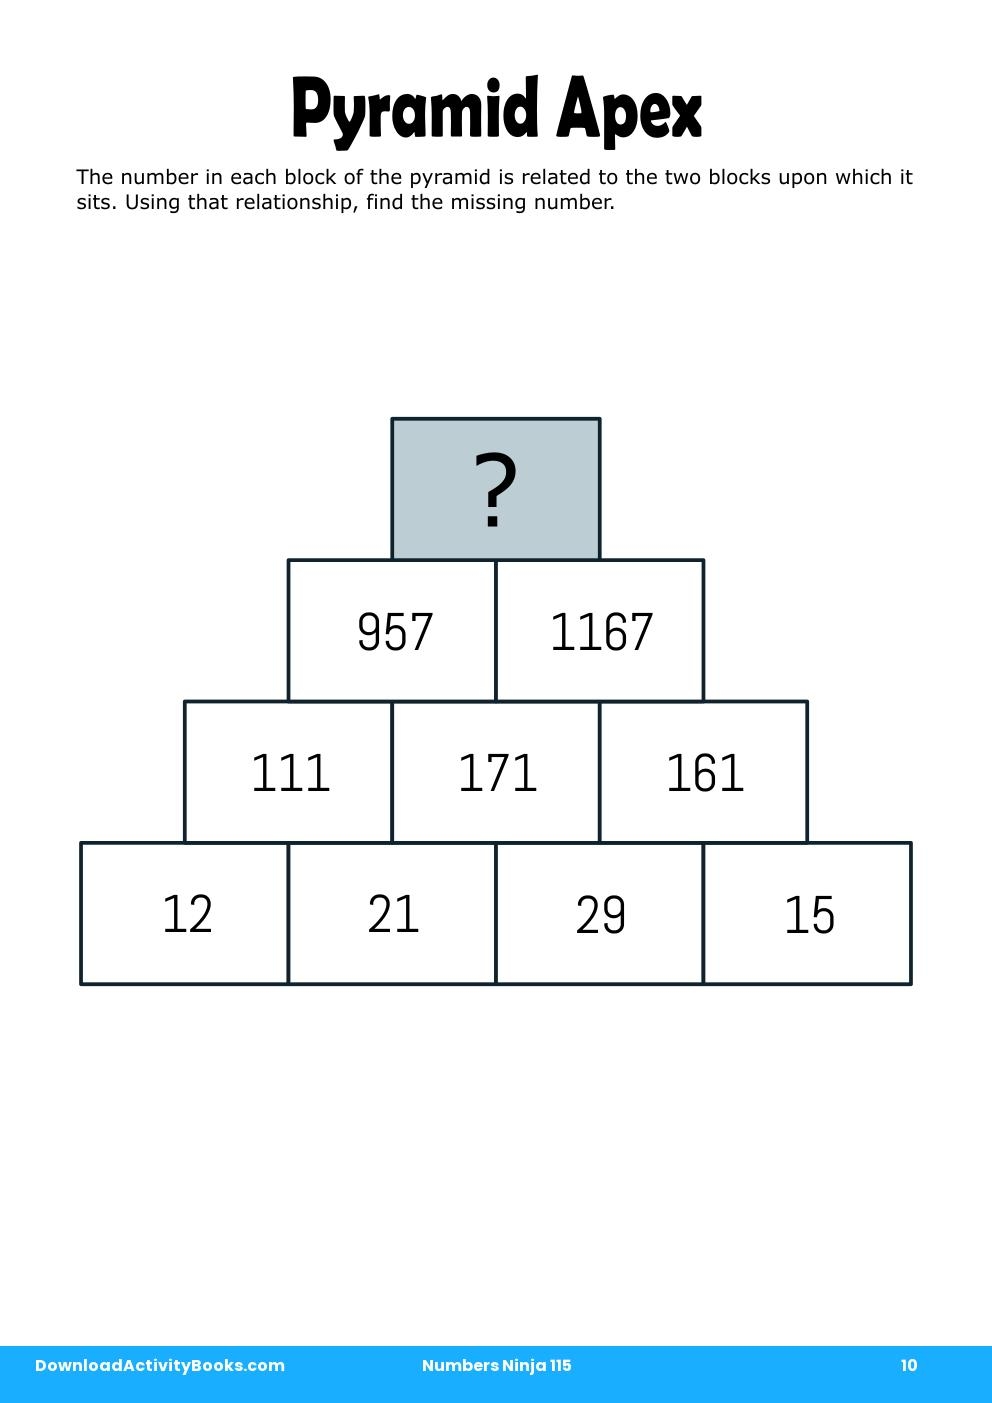 Pyramid Apex in Numbers Ninja 115